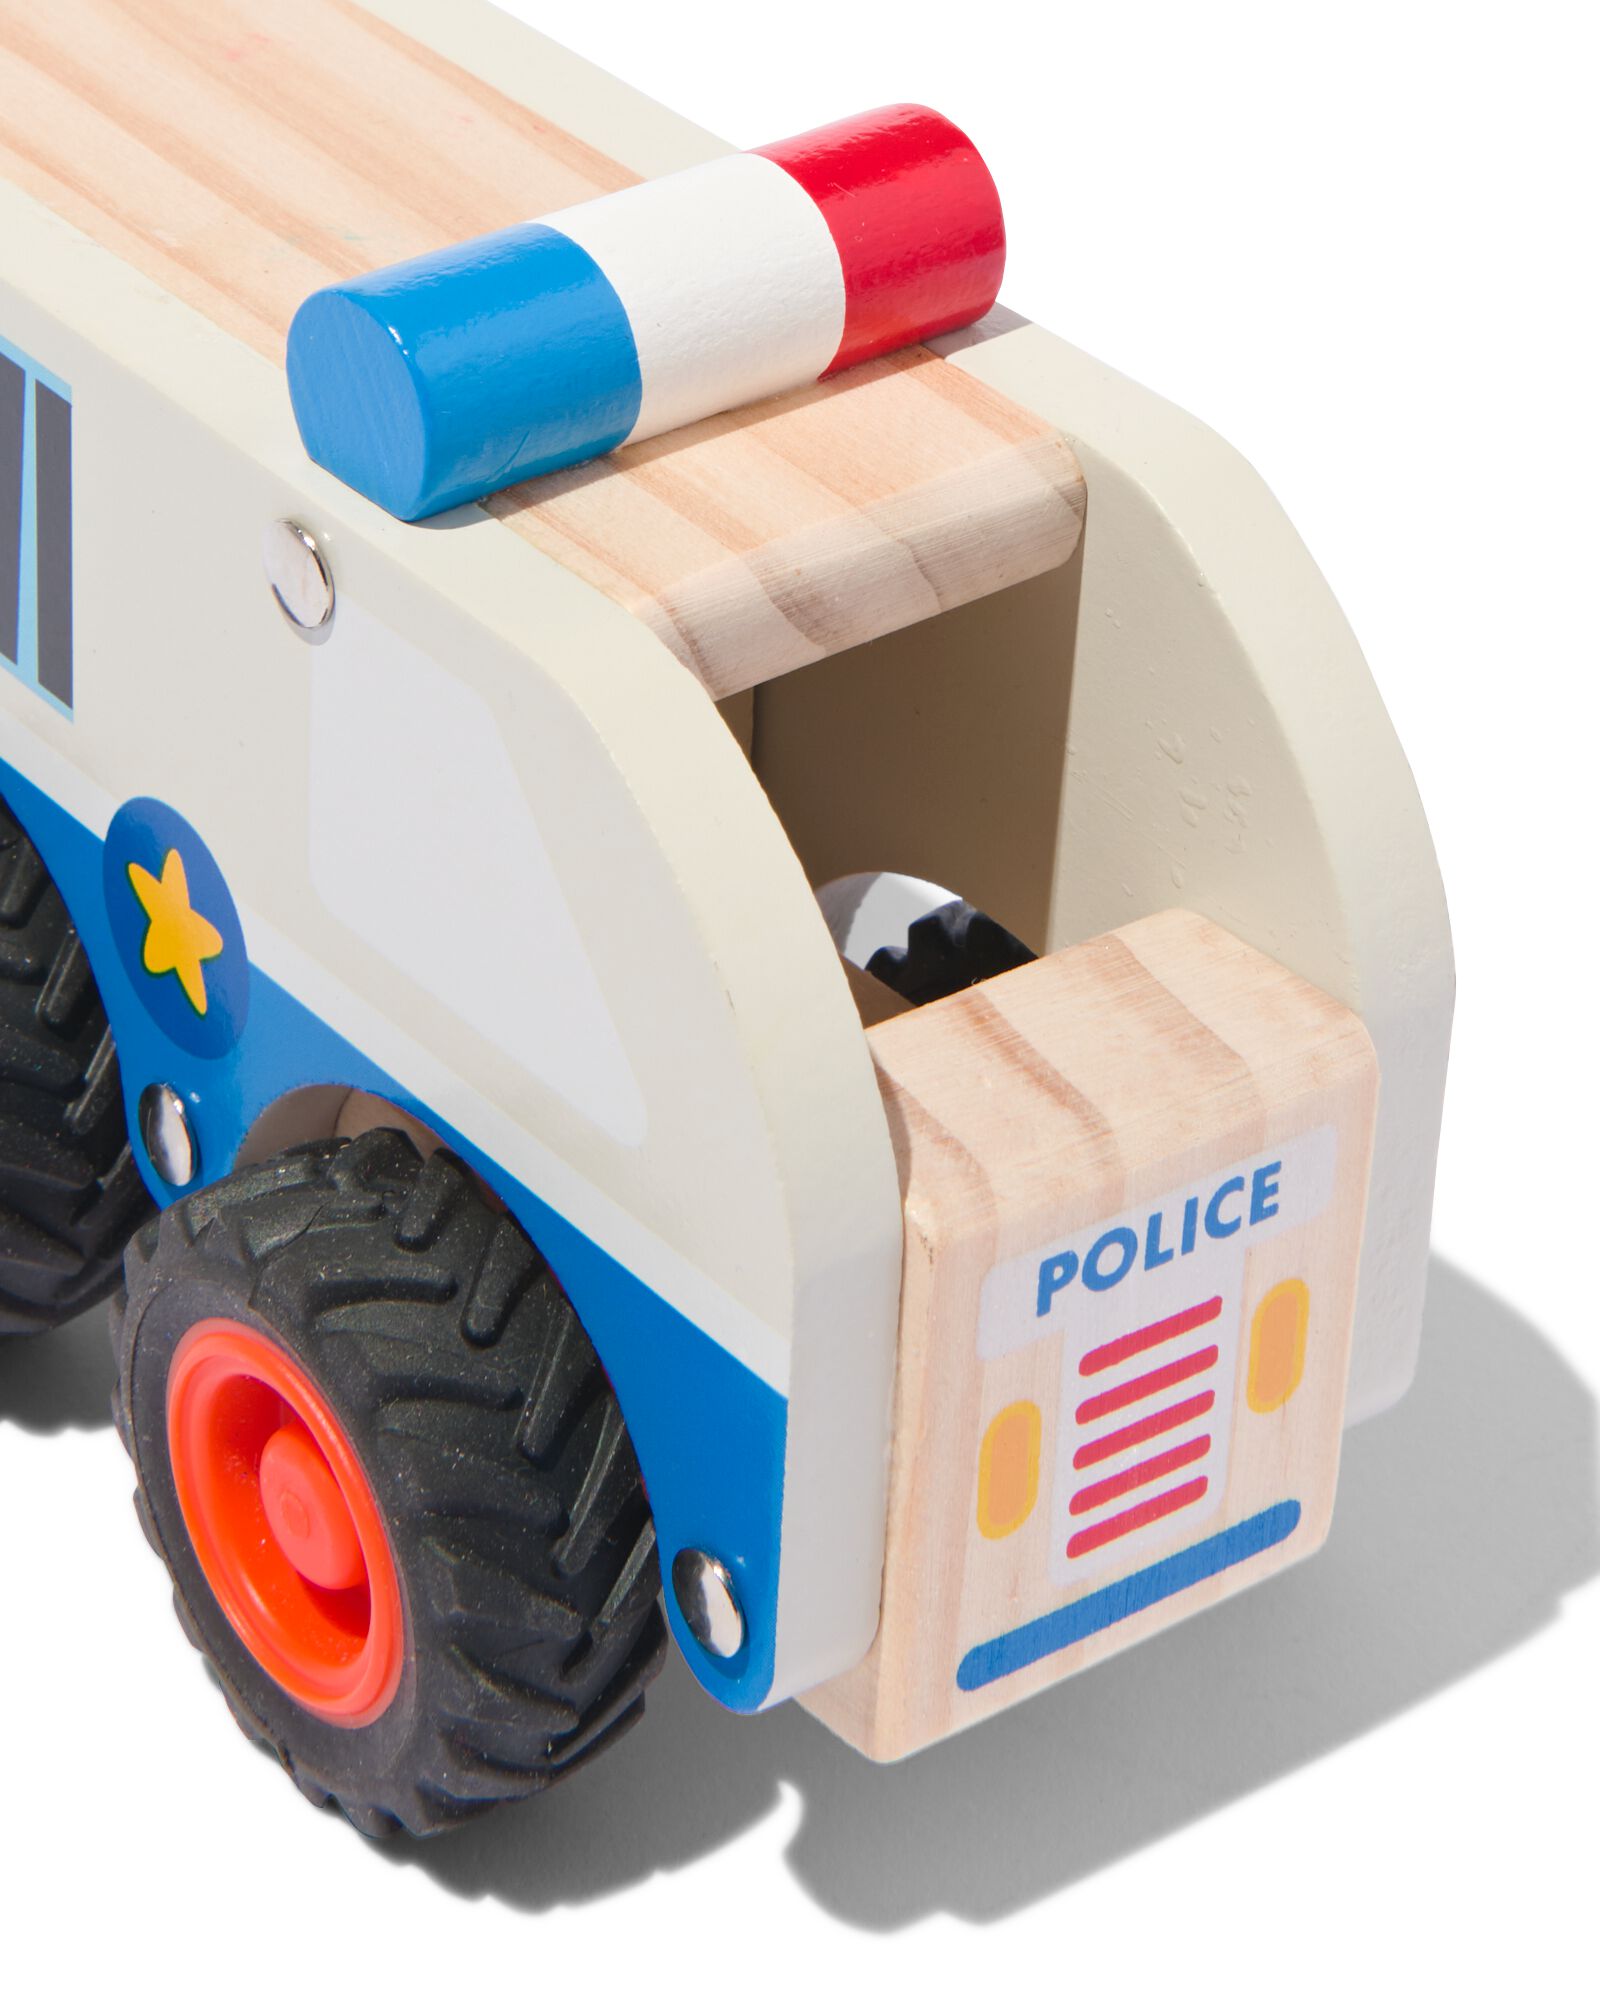 politieauto hout 12.5cm - 15130135 - HEMA